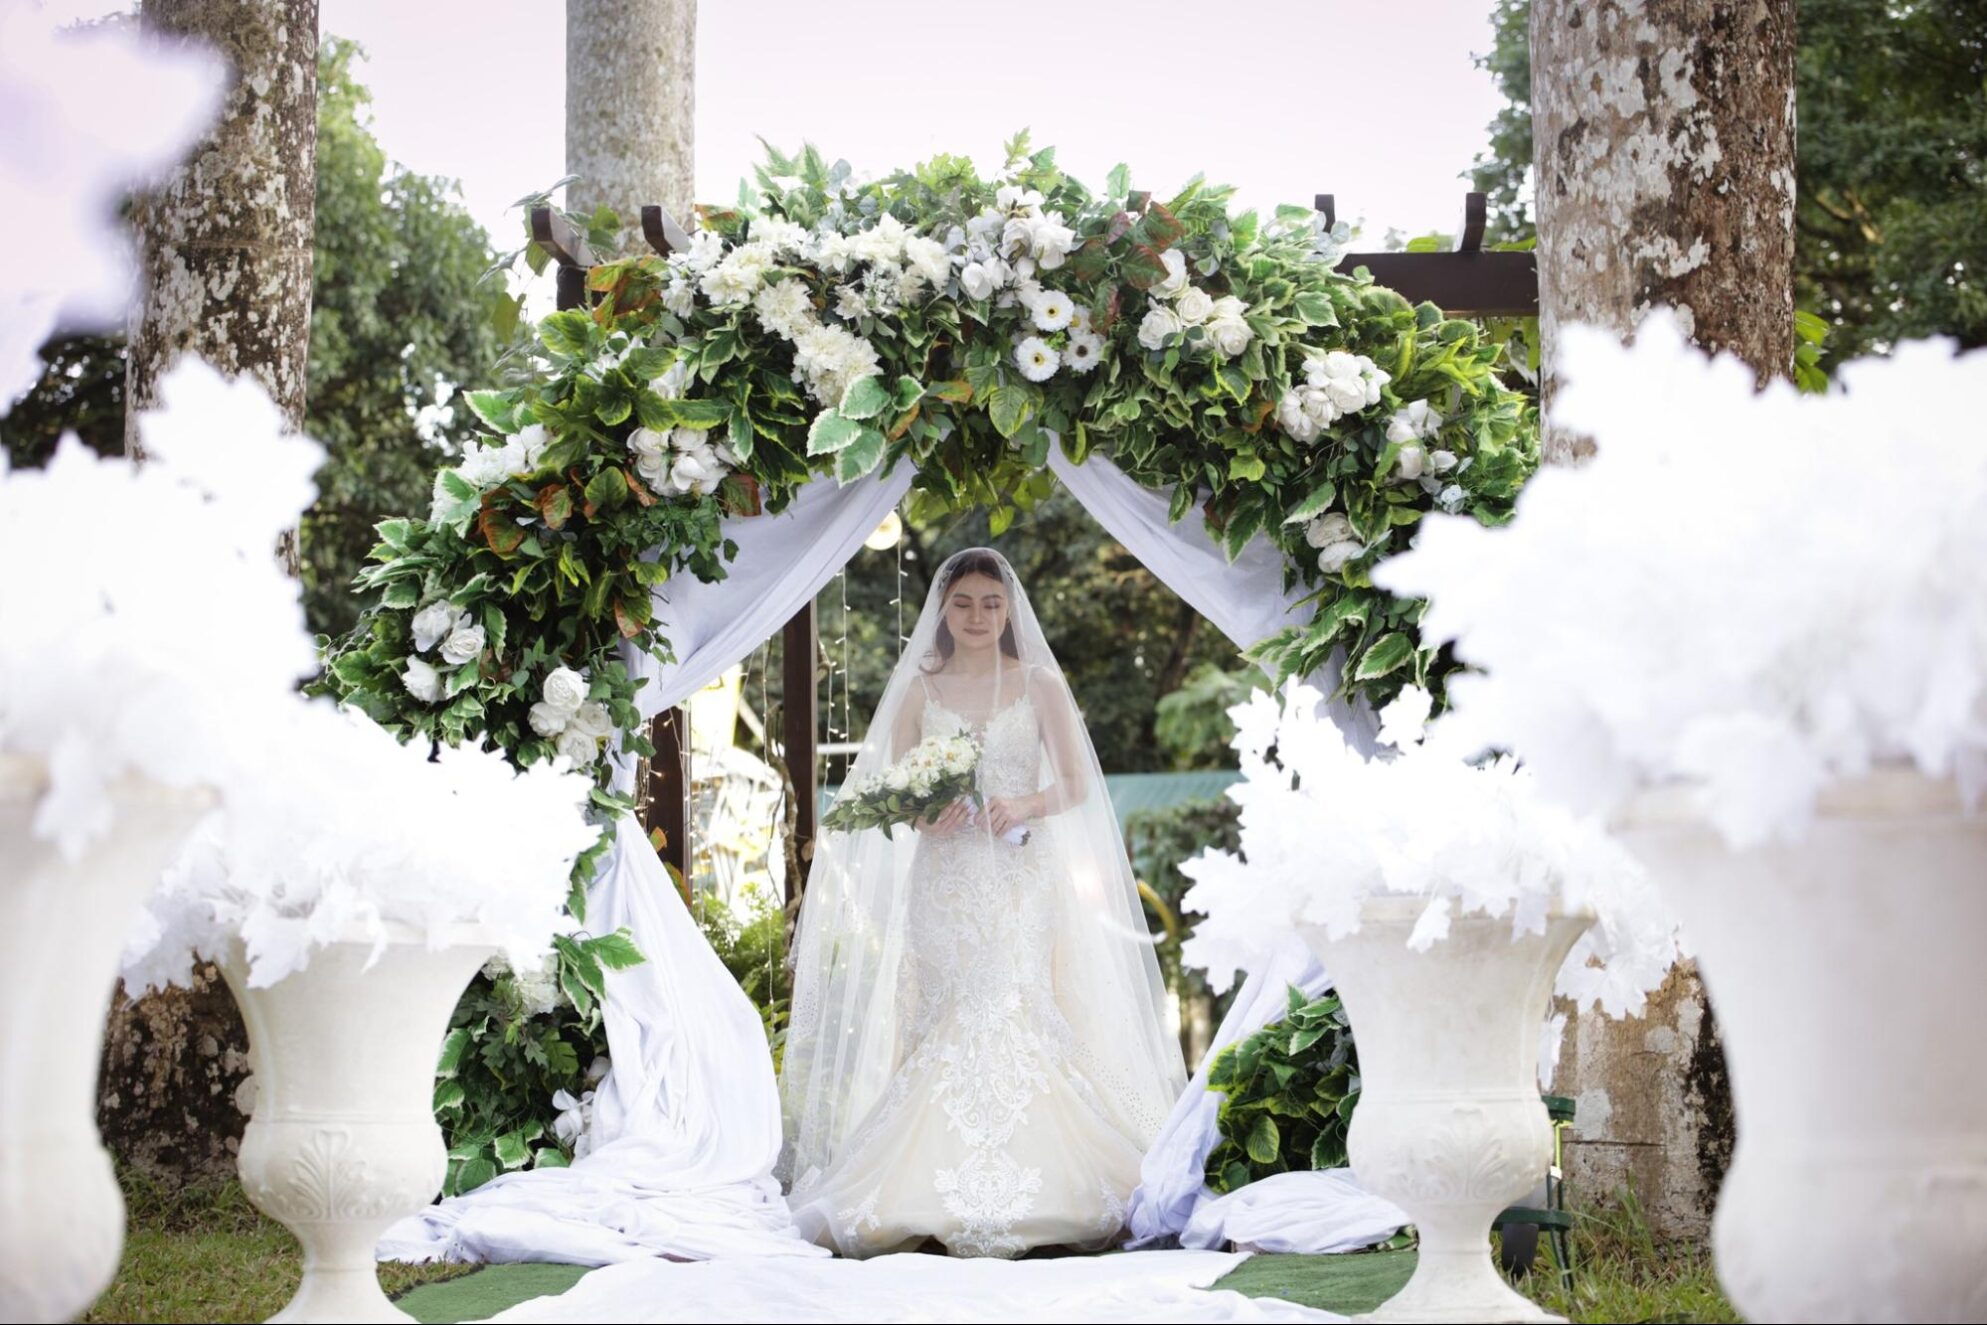 Why brides wear a veil